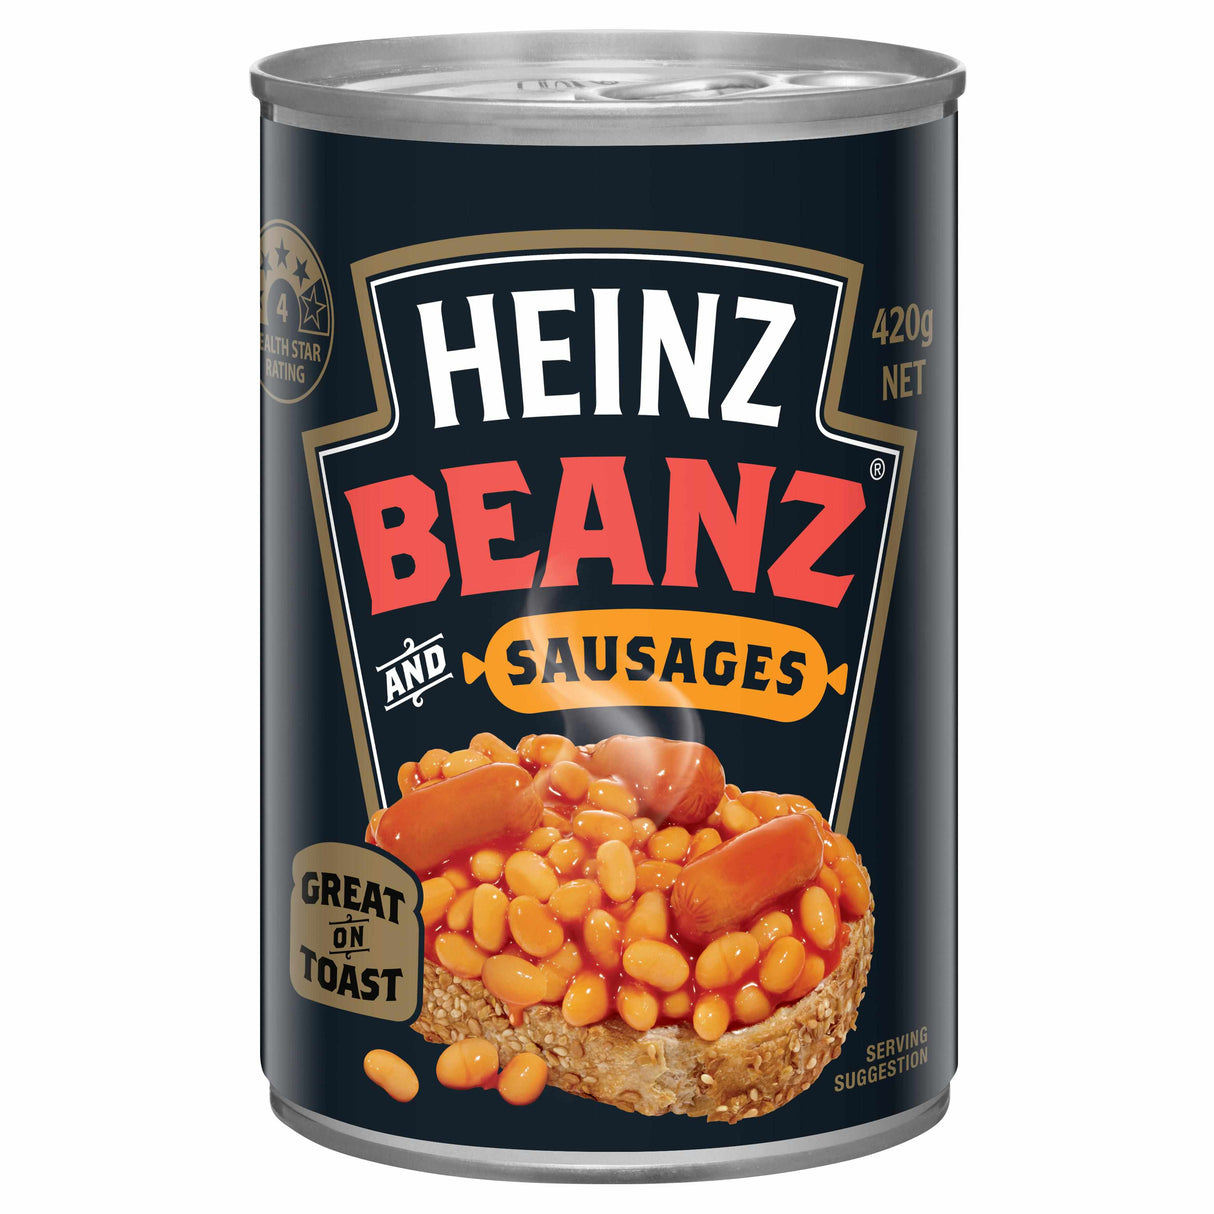 Heinz Beanz and Sausages 420g